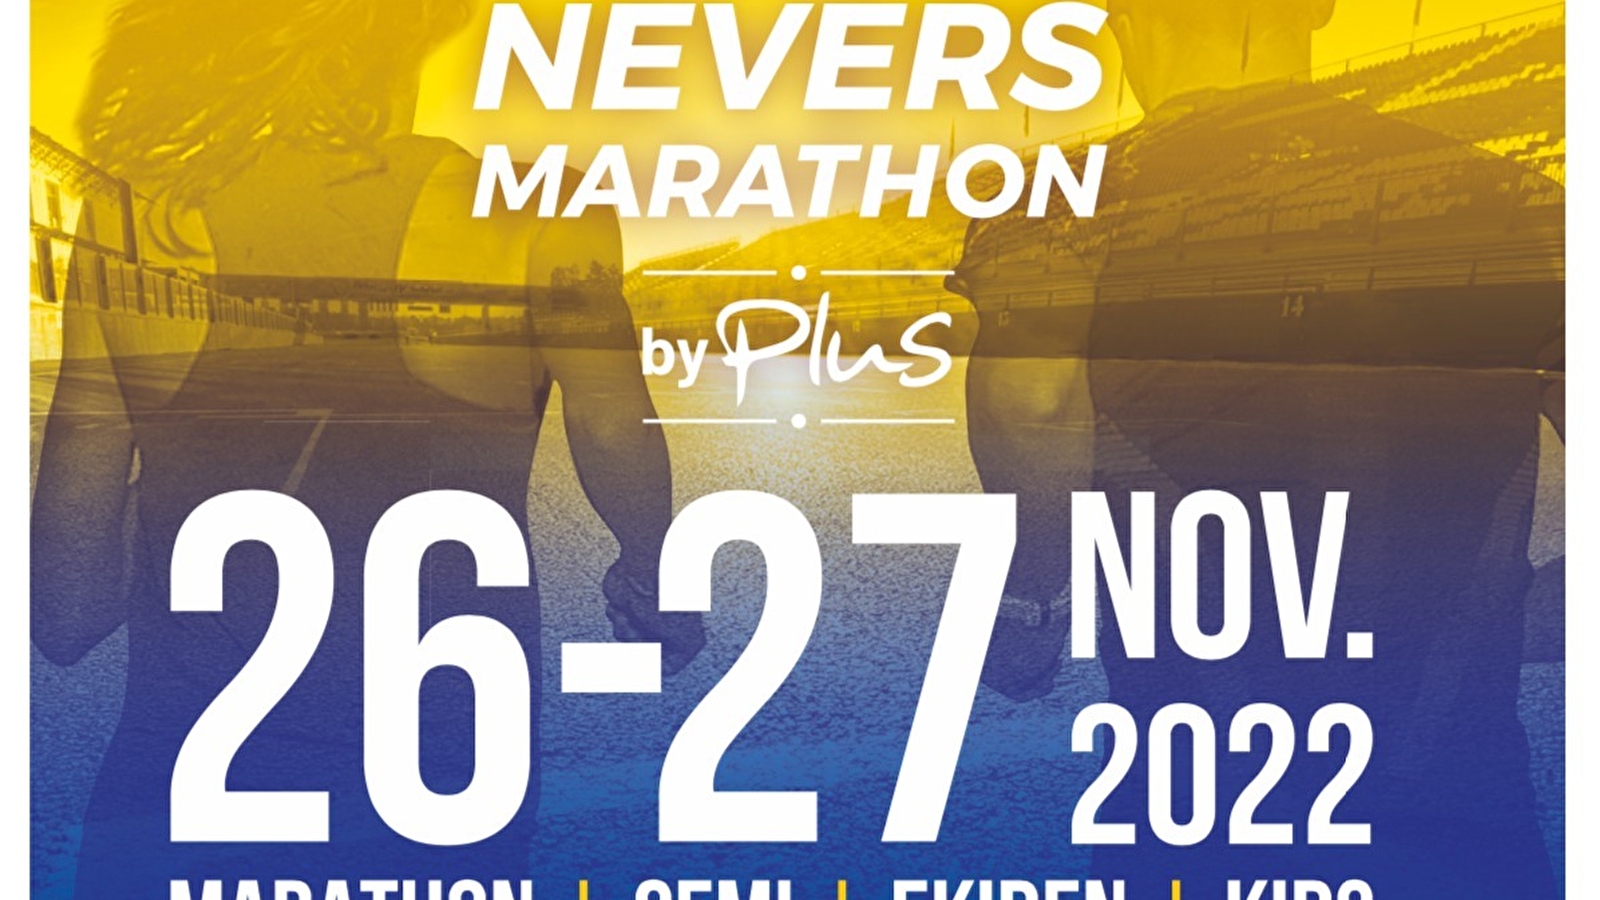 Nevers Marathon by Plus